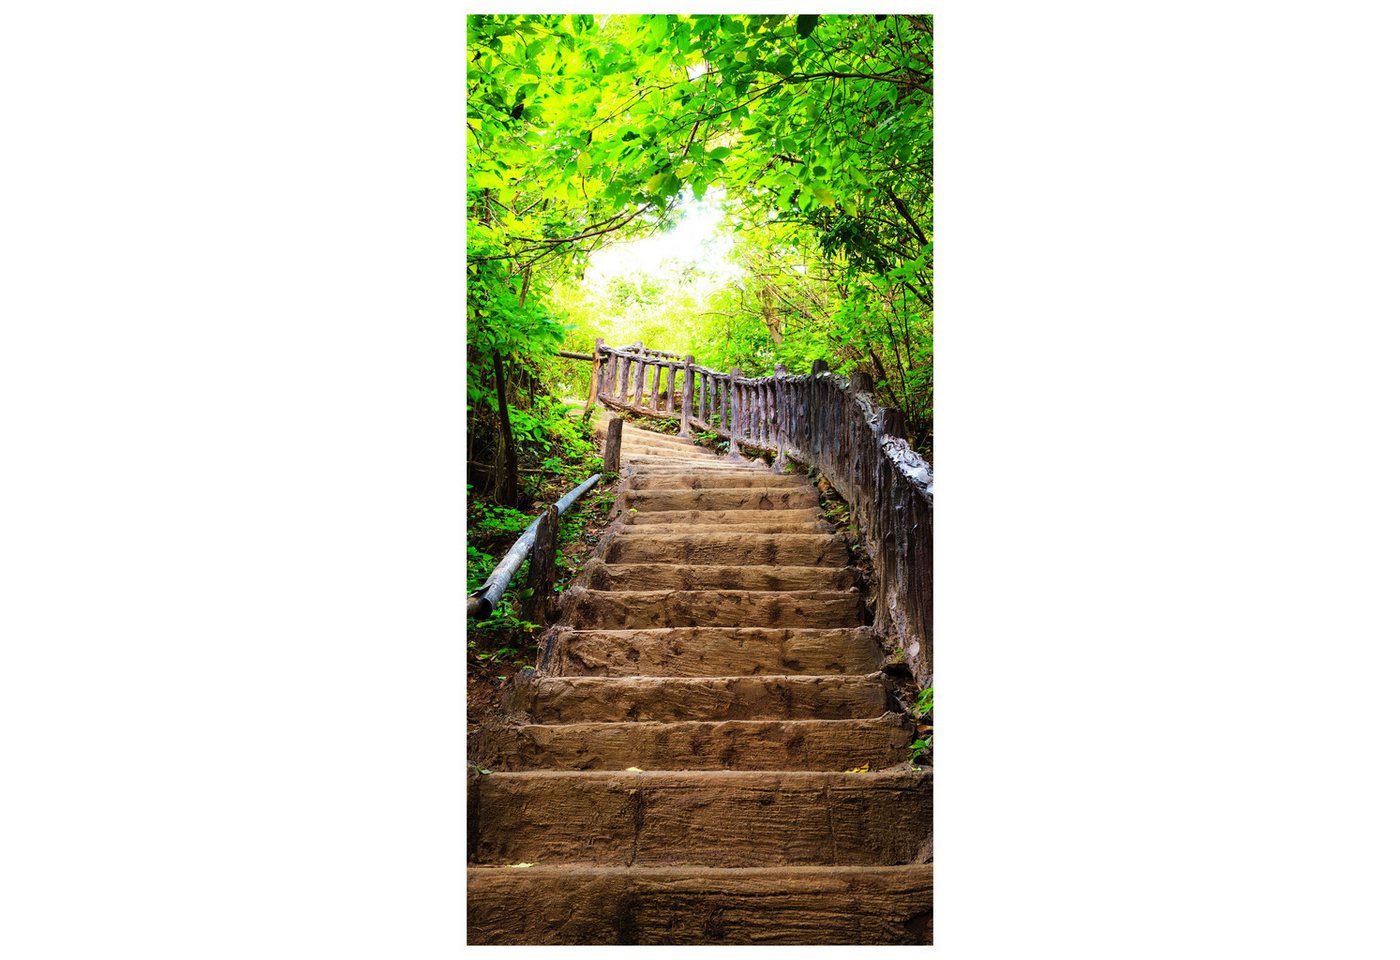 wandmotiv24 Türtapete Treppe im Wald, Steintreppe, Holz, Bäume, glatt, Fototapete, Wandtapete, Motivtapete, matt, selbstklebende Vliestapete von wandmotiv24